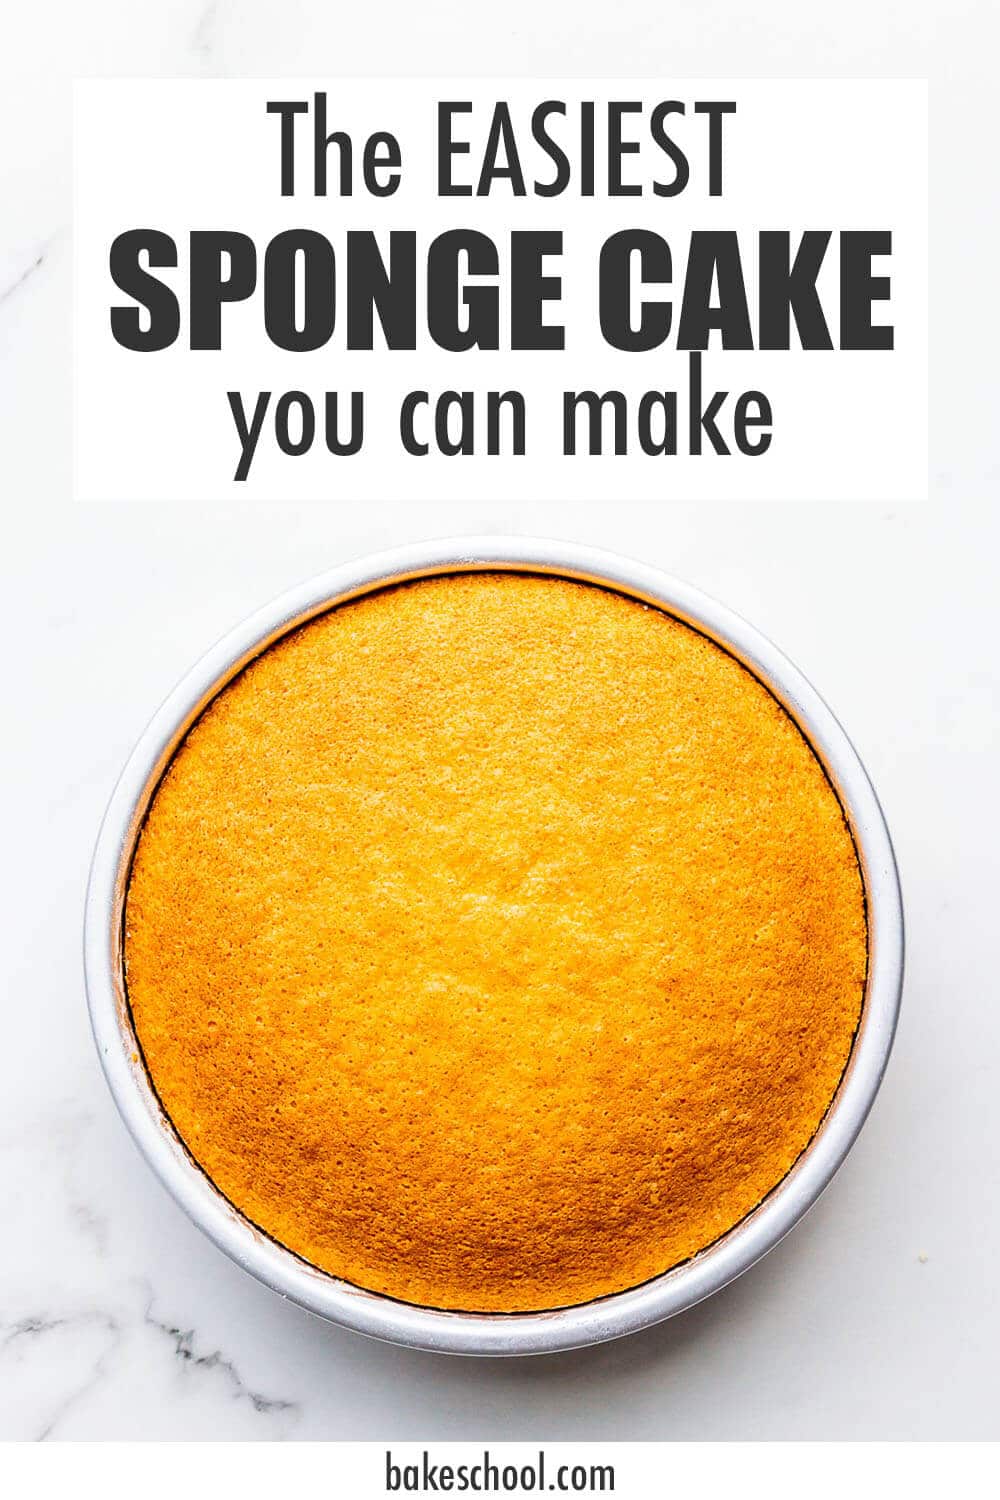 Hot milk sponge cake freshly baked cooling in cake pan.